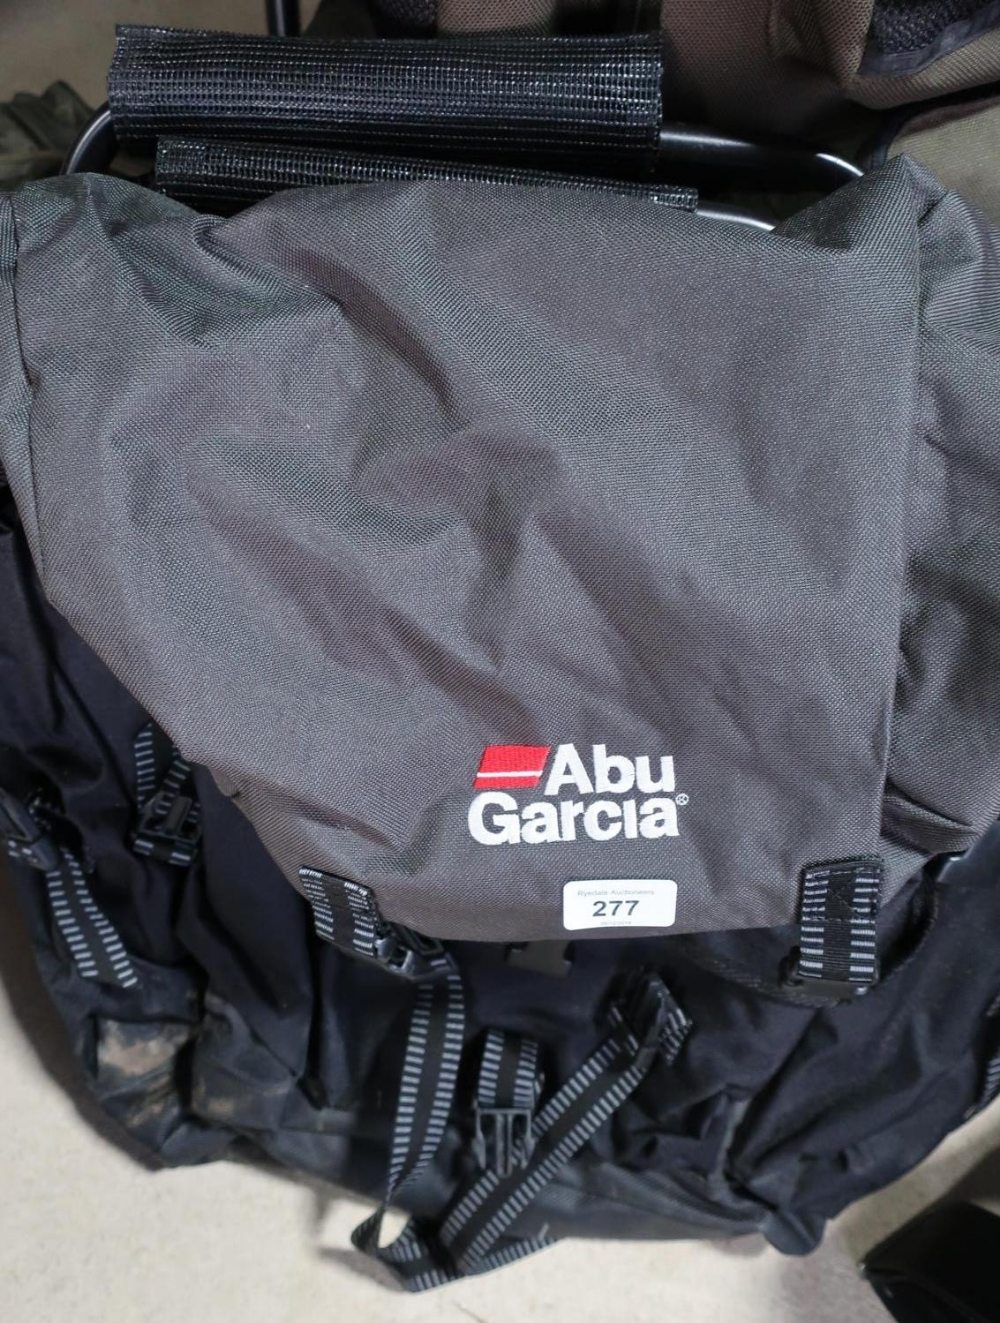 Abu Garcia fishing bag with detachable stool